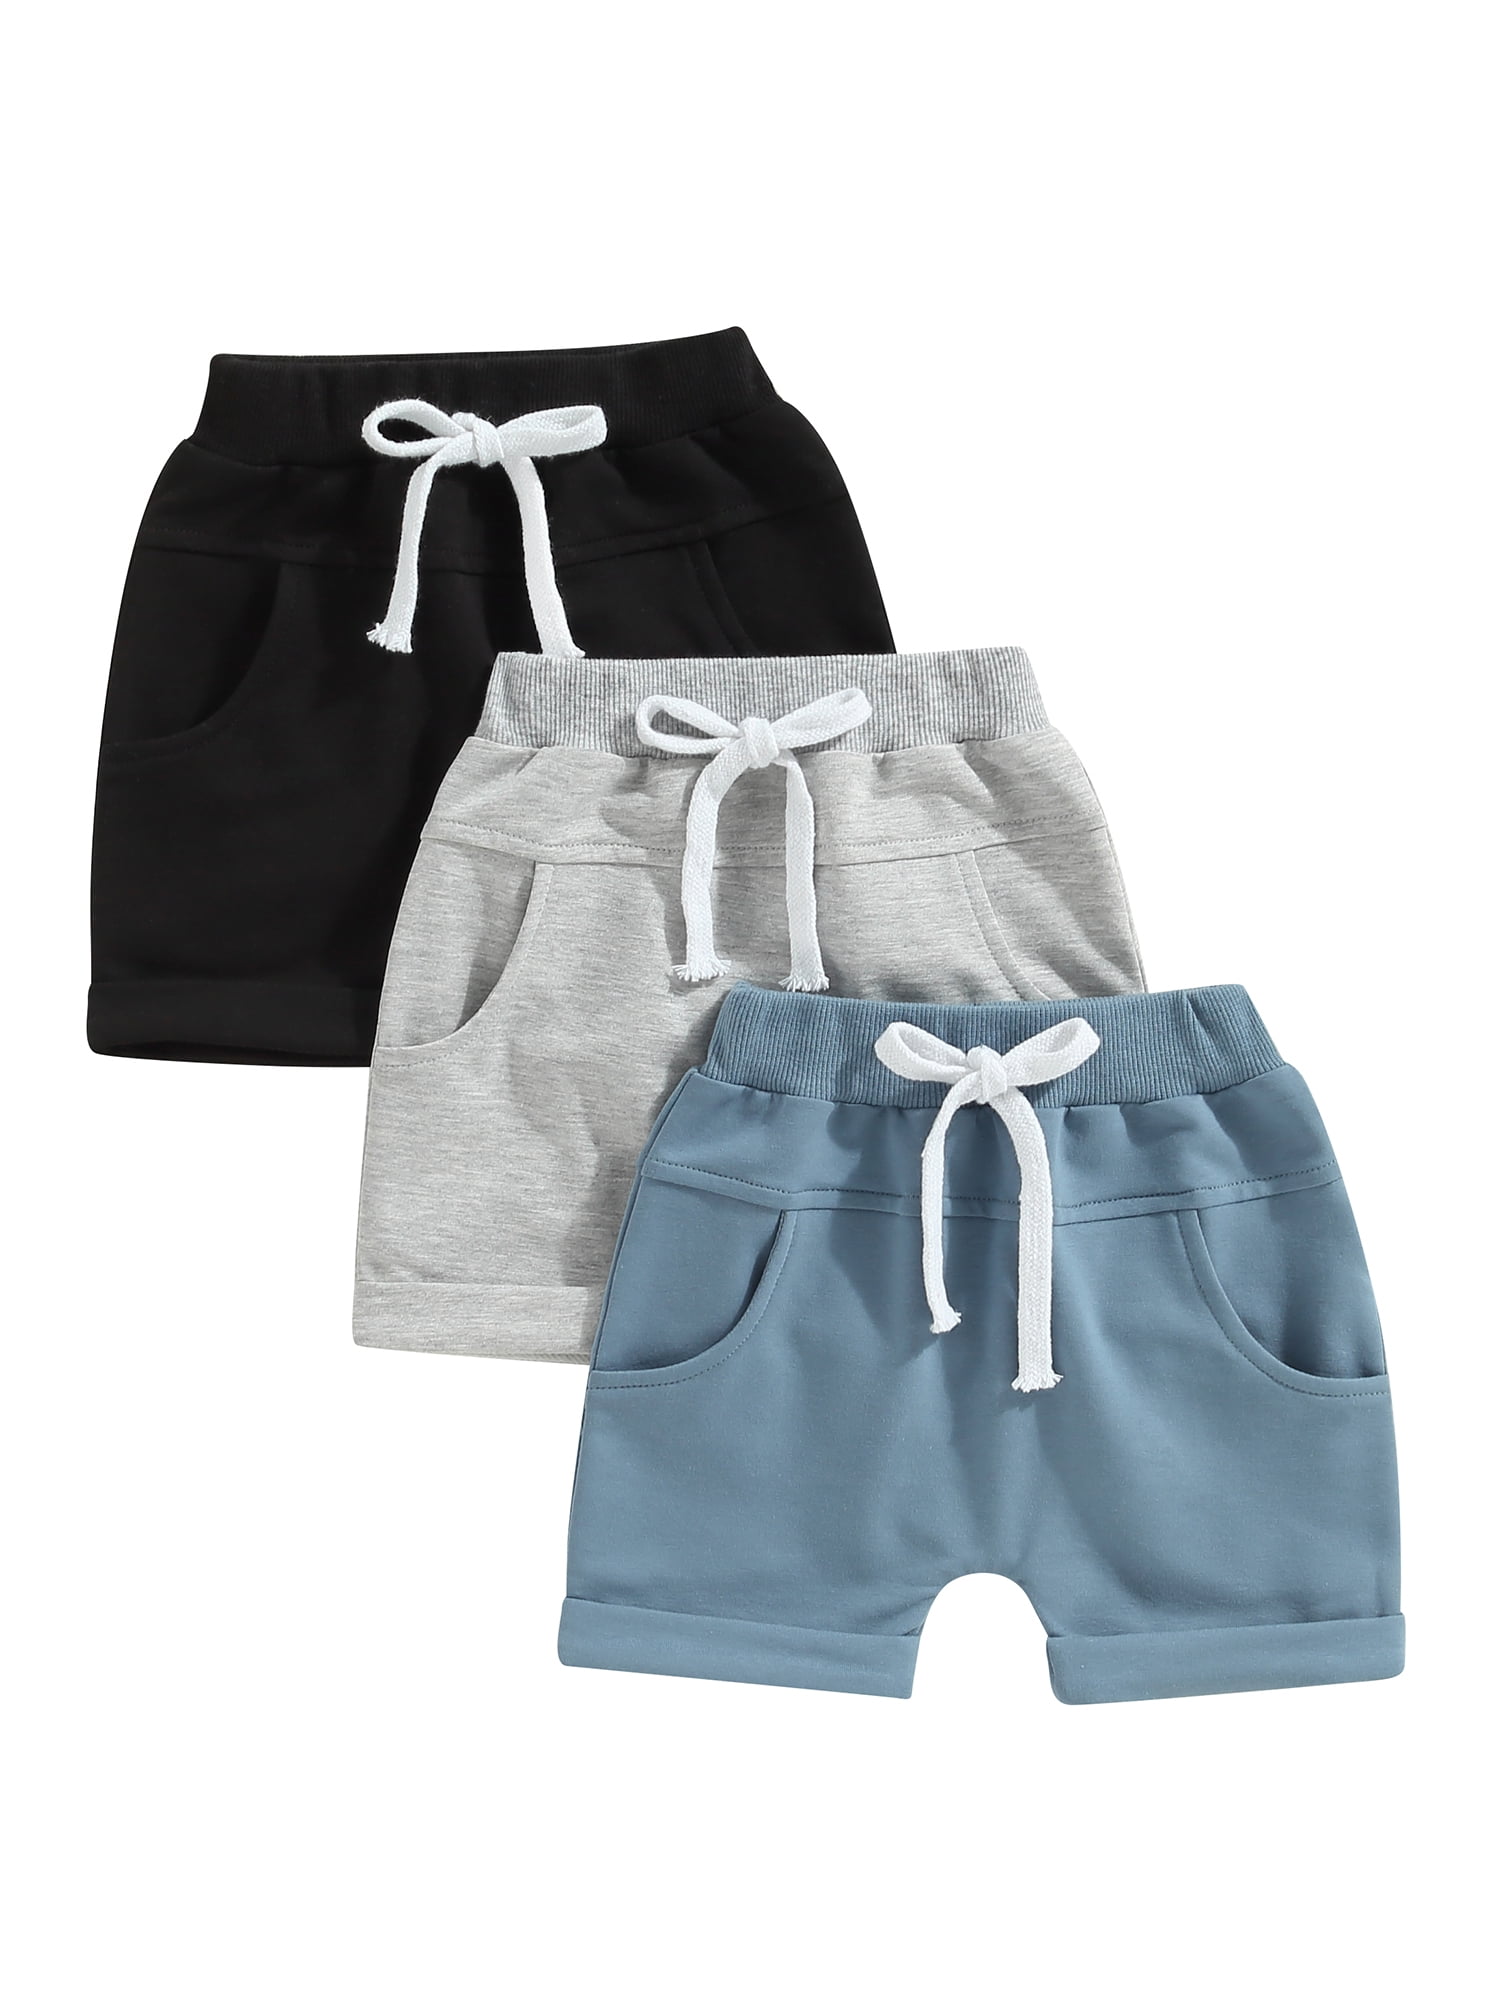 GXFC 3-Pack Toddler Baby Boys Summer Sports Shorts Infant Boys Elastic ...